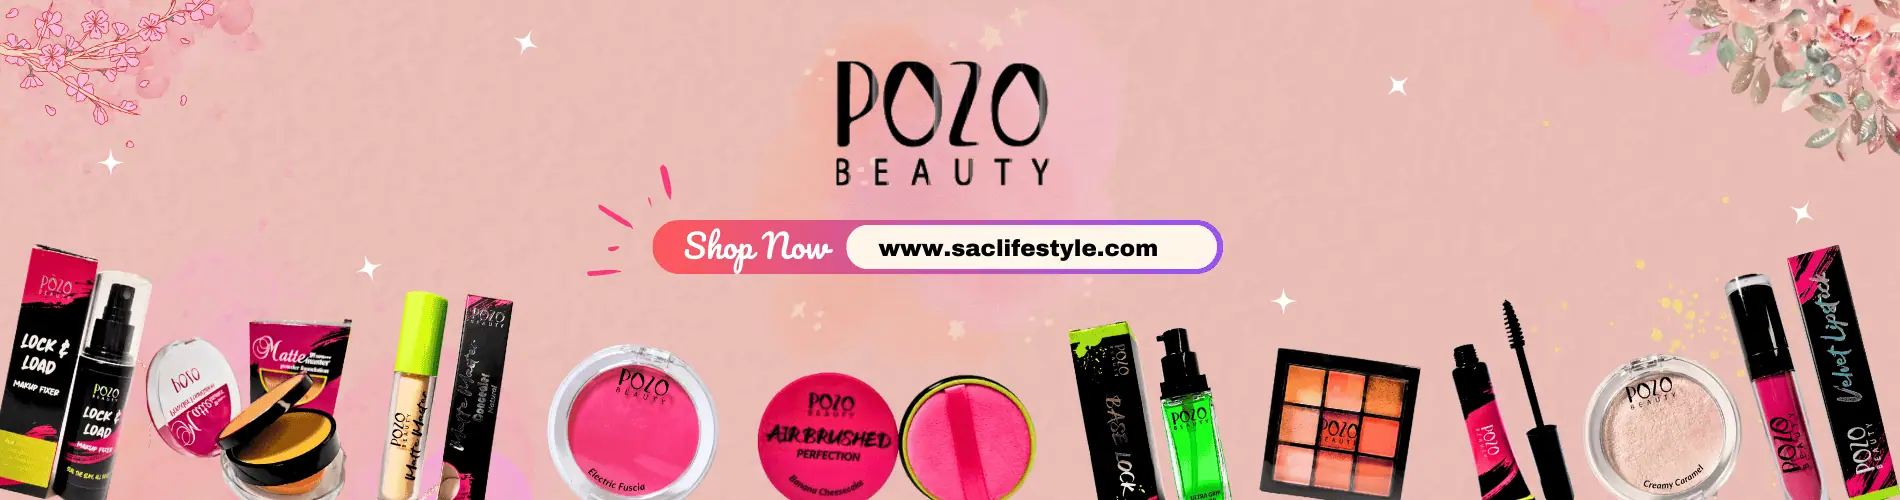 webbanner pozo beauty banner 0428 1